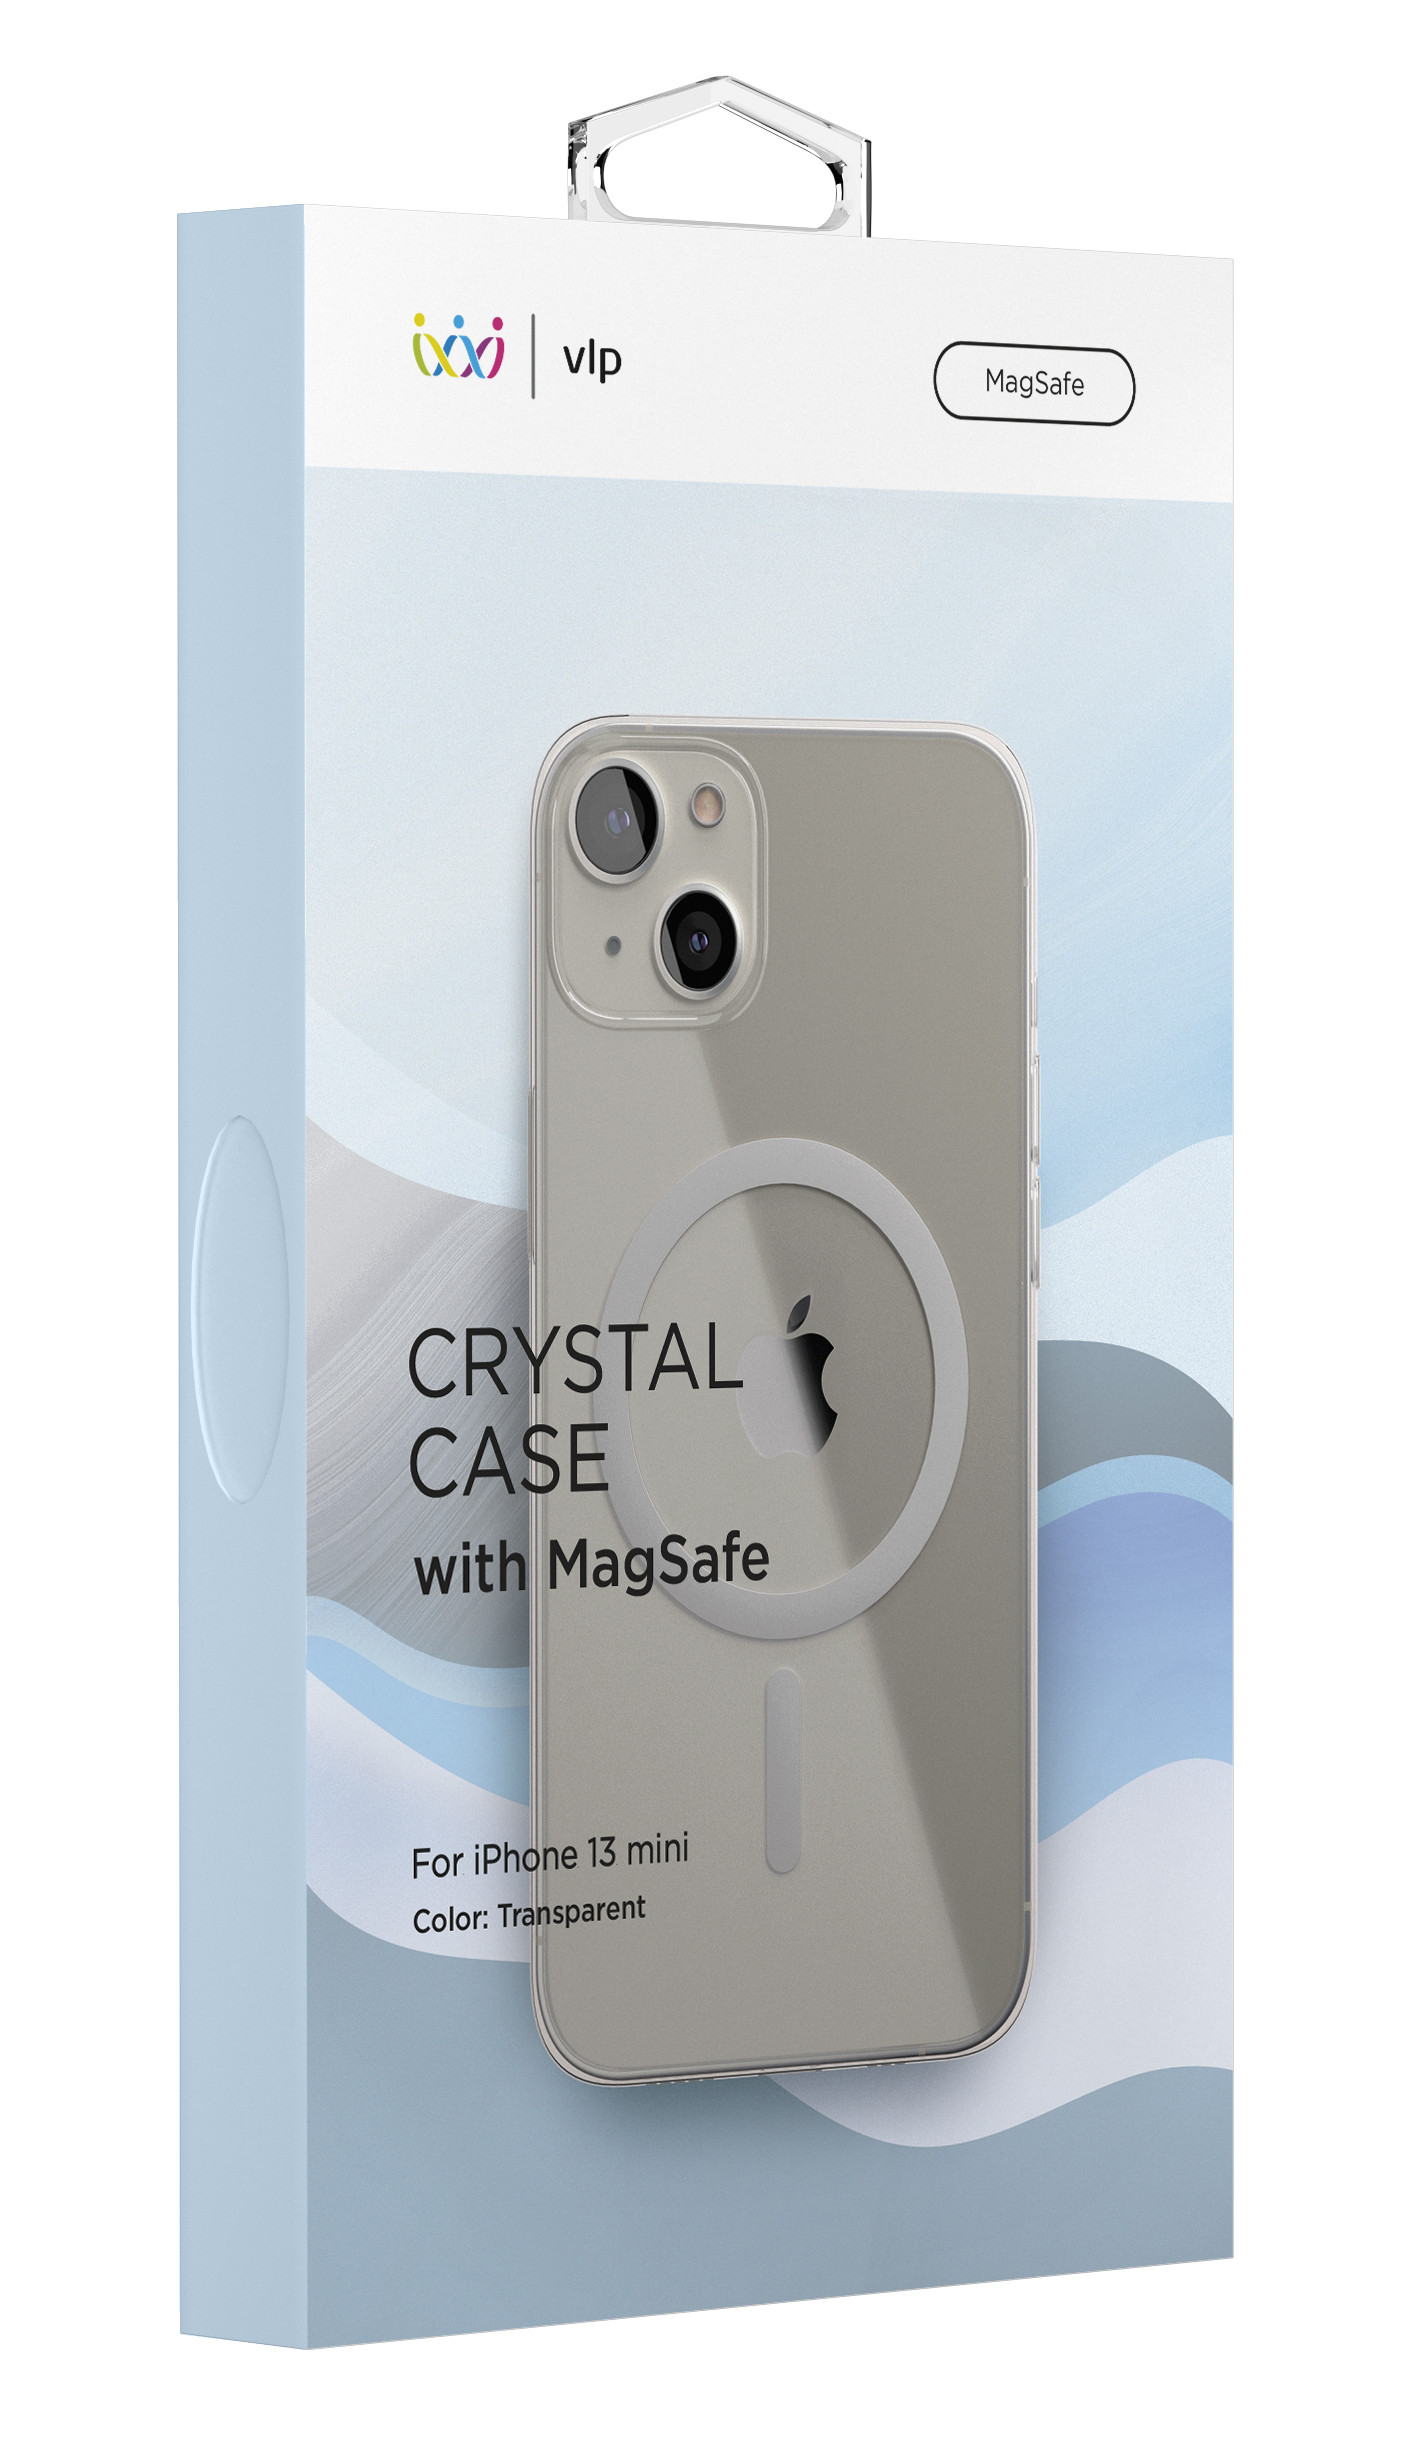 Фото — Чехол для смартфона vlp Silicone case with MagSafe для iPhone 13 mini, прозрачный